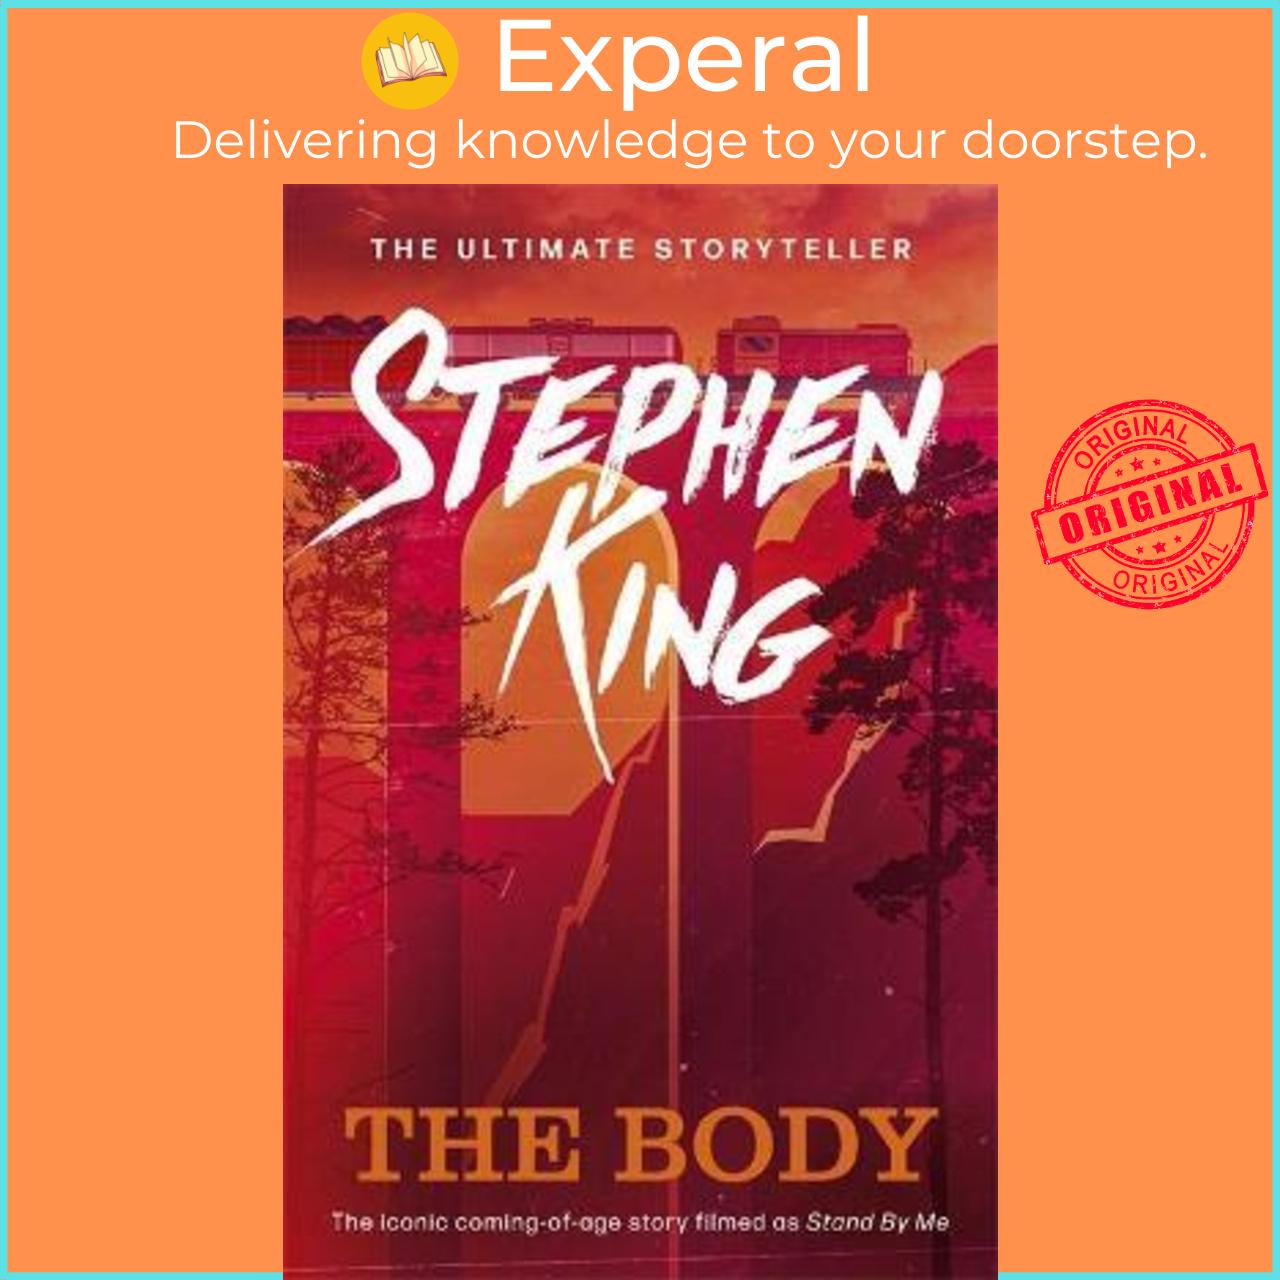 Sách - The Body by Stephen King (UK edition, paperback)